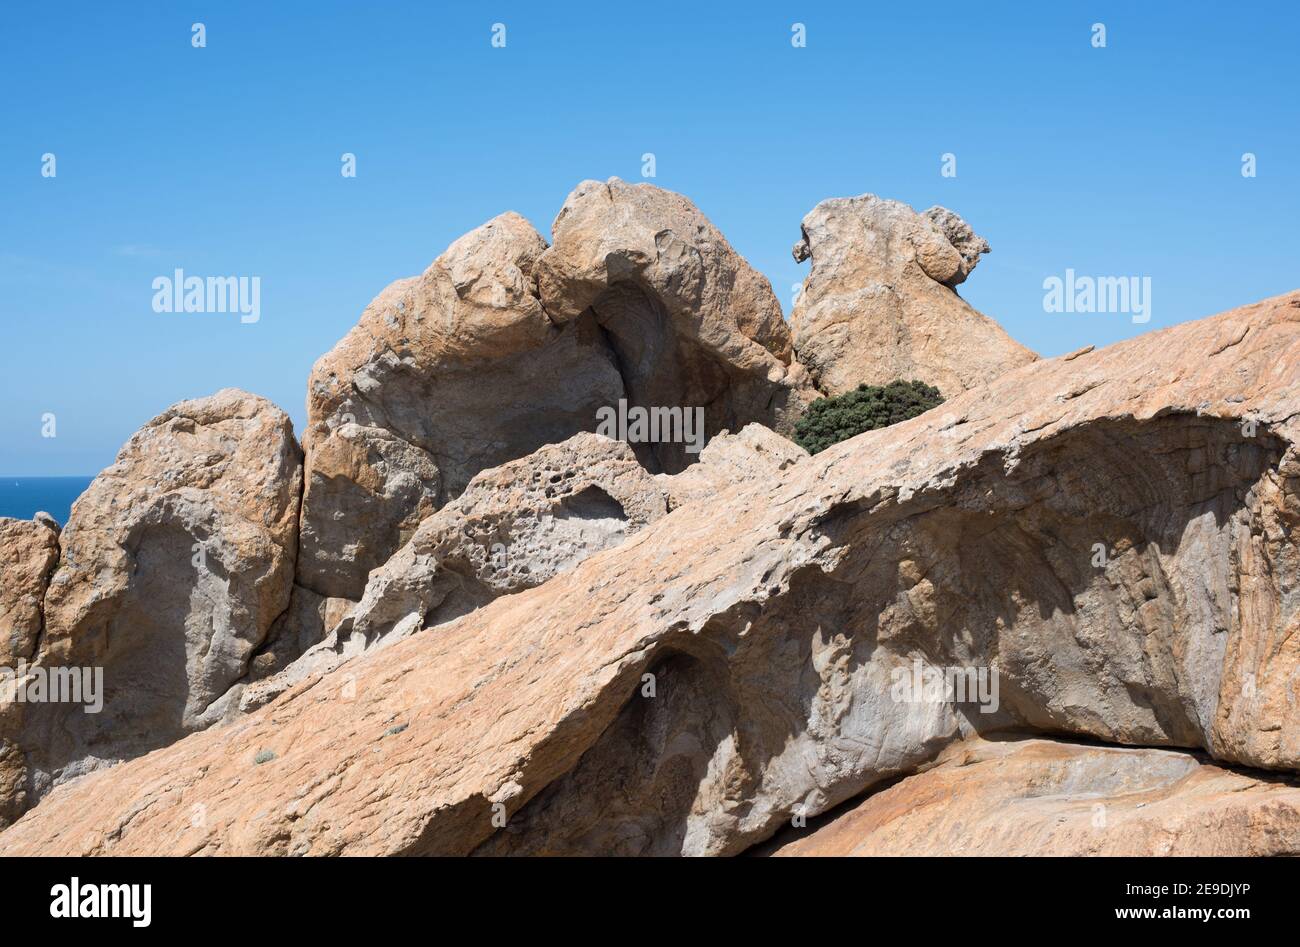 Pegmatite dike (singular form named The Camel). Cap Creus Natural Park, Girona province, Catalonia, Spain. Stock Photo